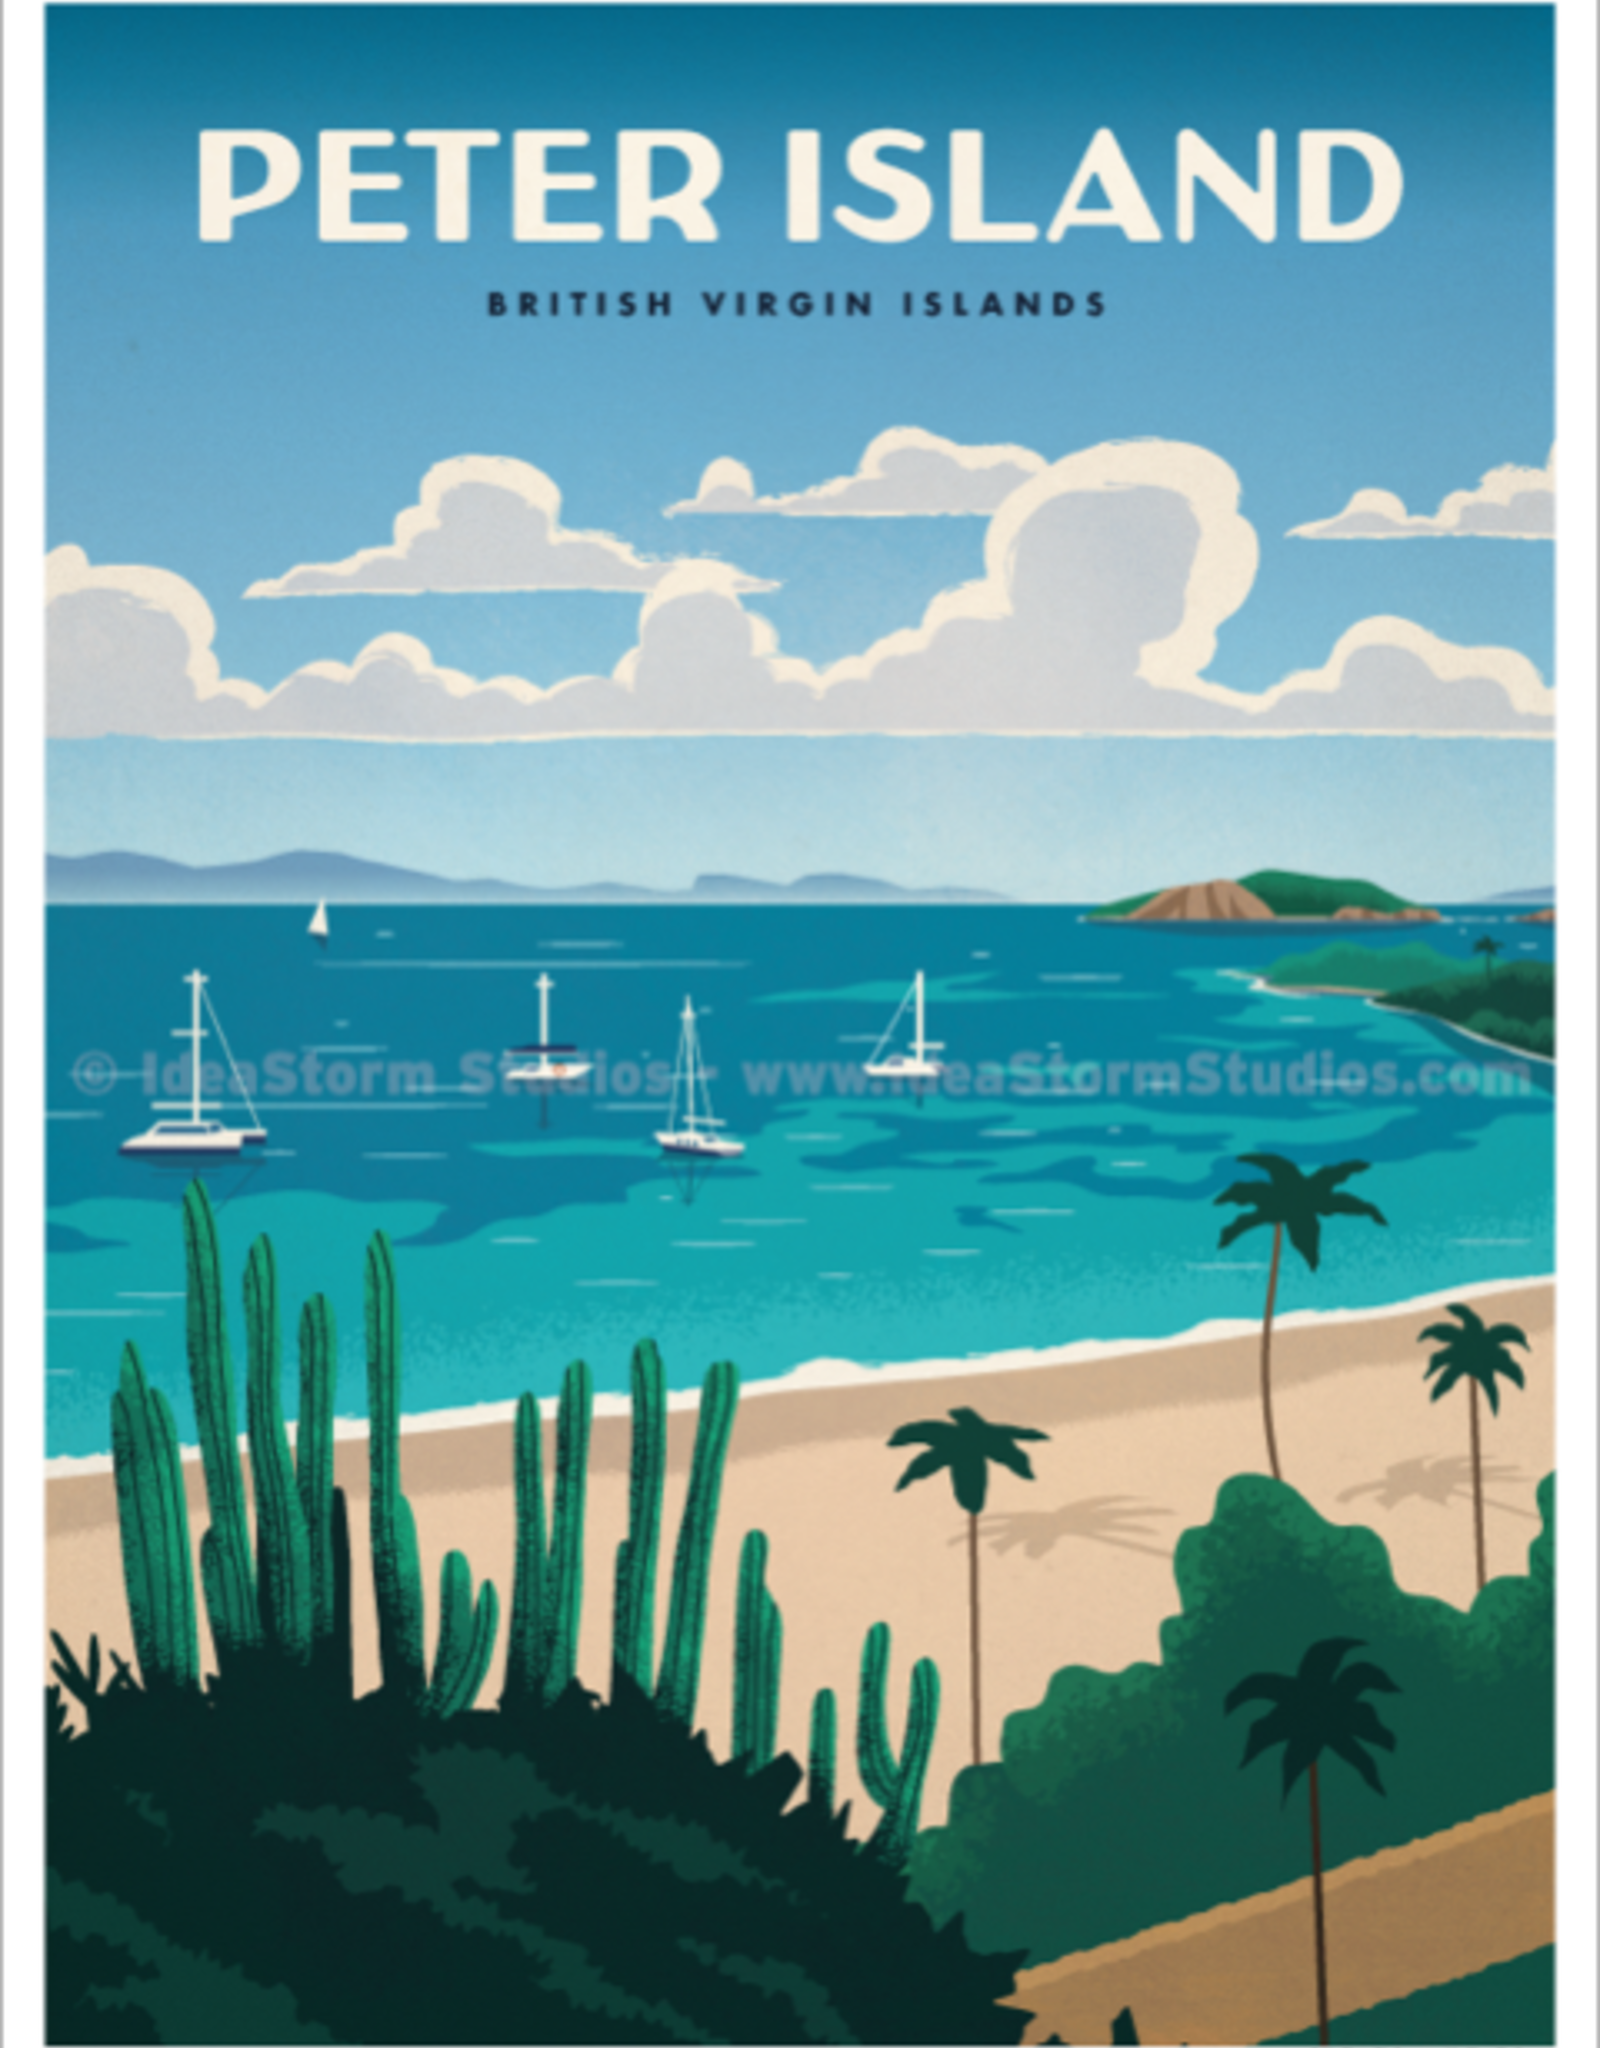 BVI Retro travel poster - Peter Island - Giclee print 12" x 16"